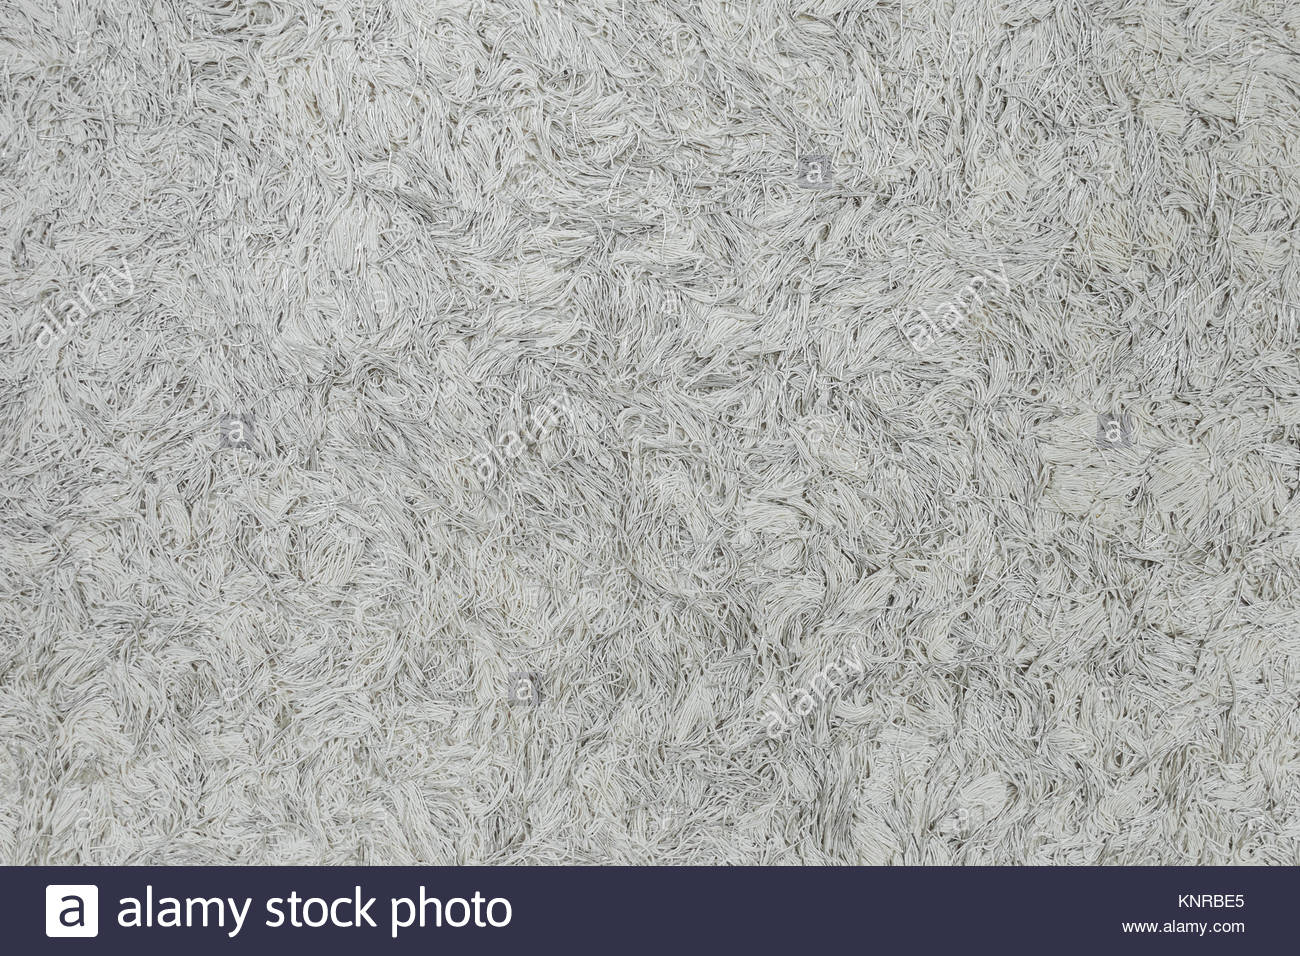 White Fuzzy Texture Liquid Wallpaper In Home Interior Horizontal